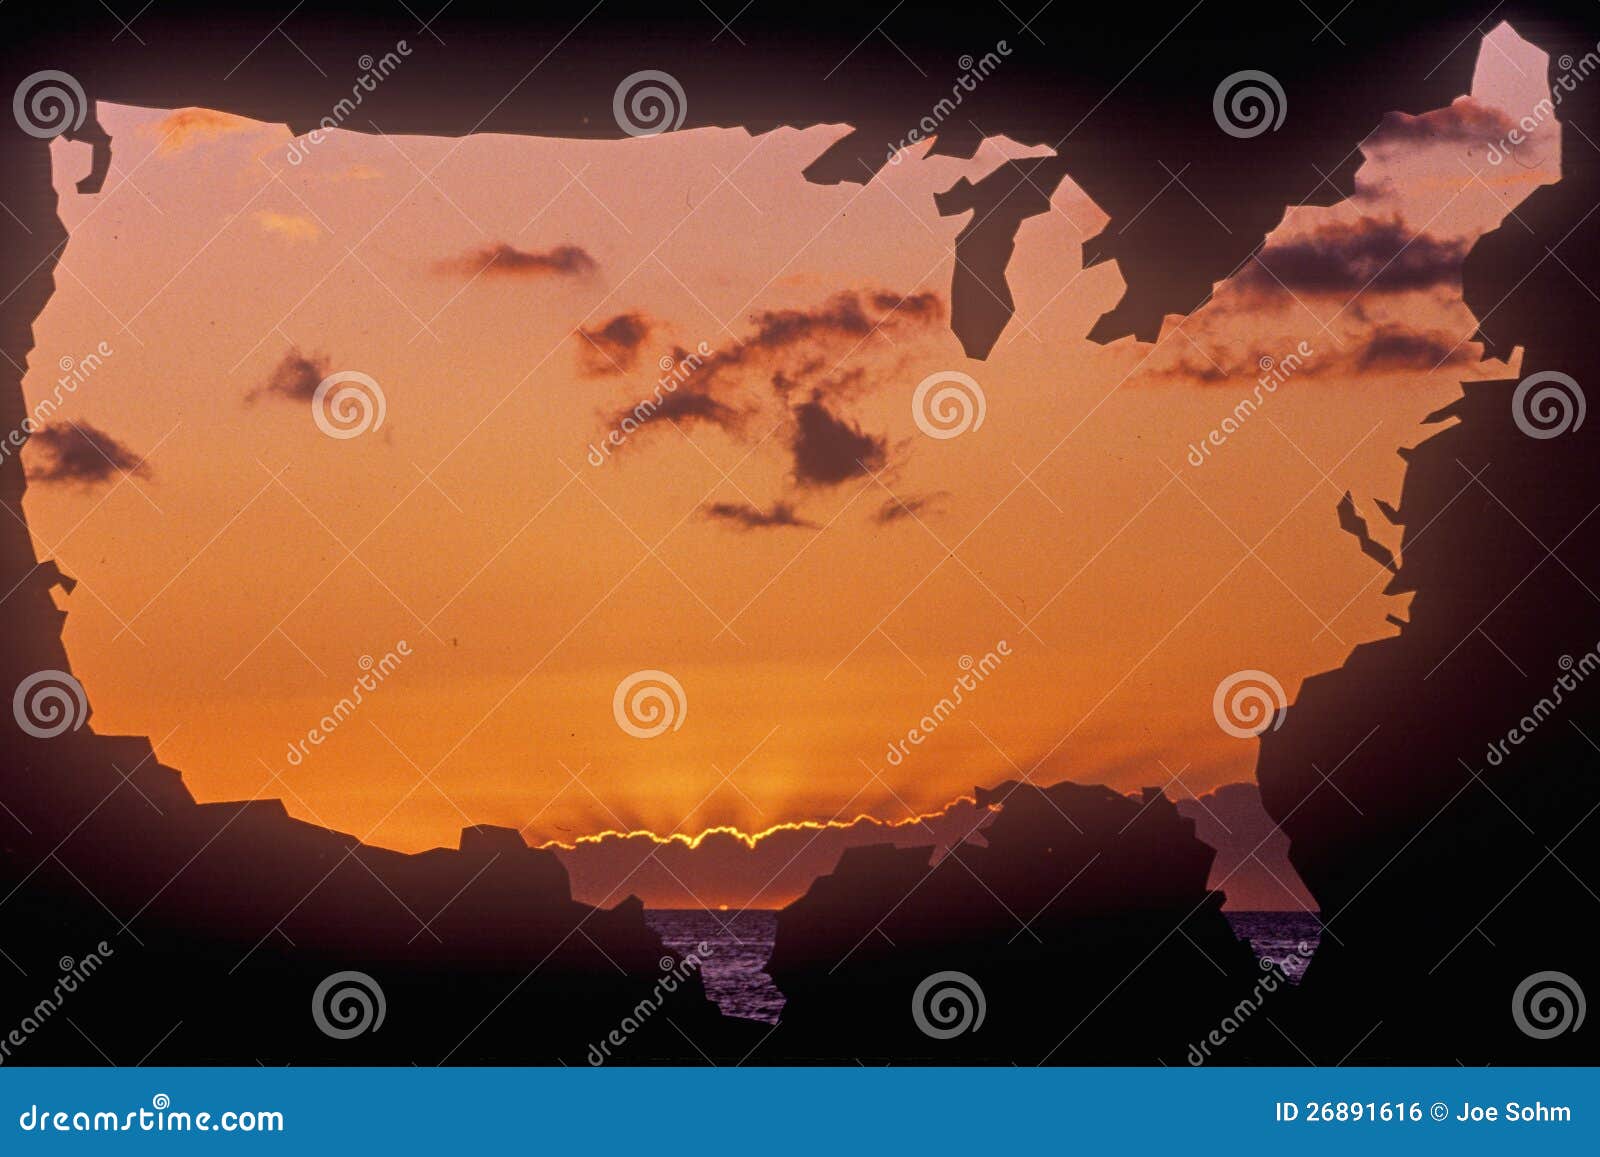 united states mainland with sunset sky